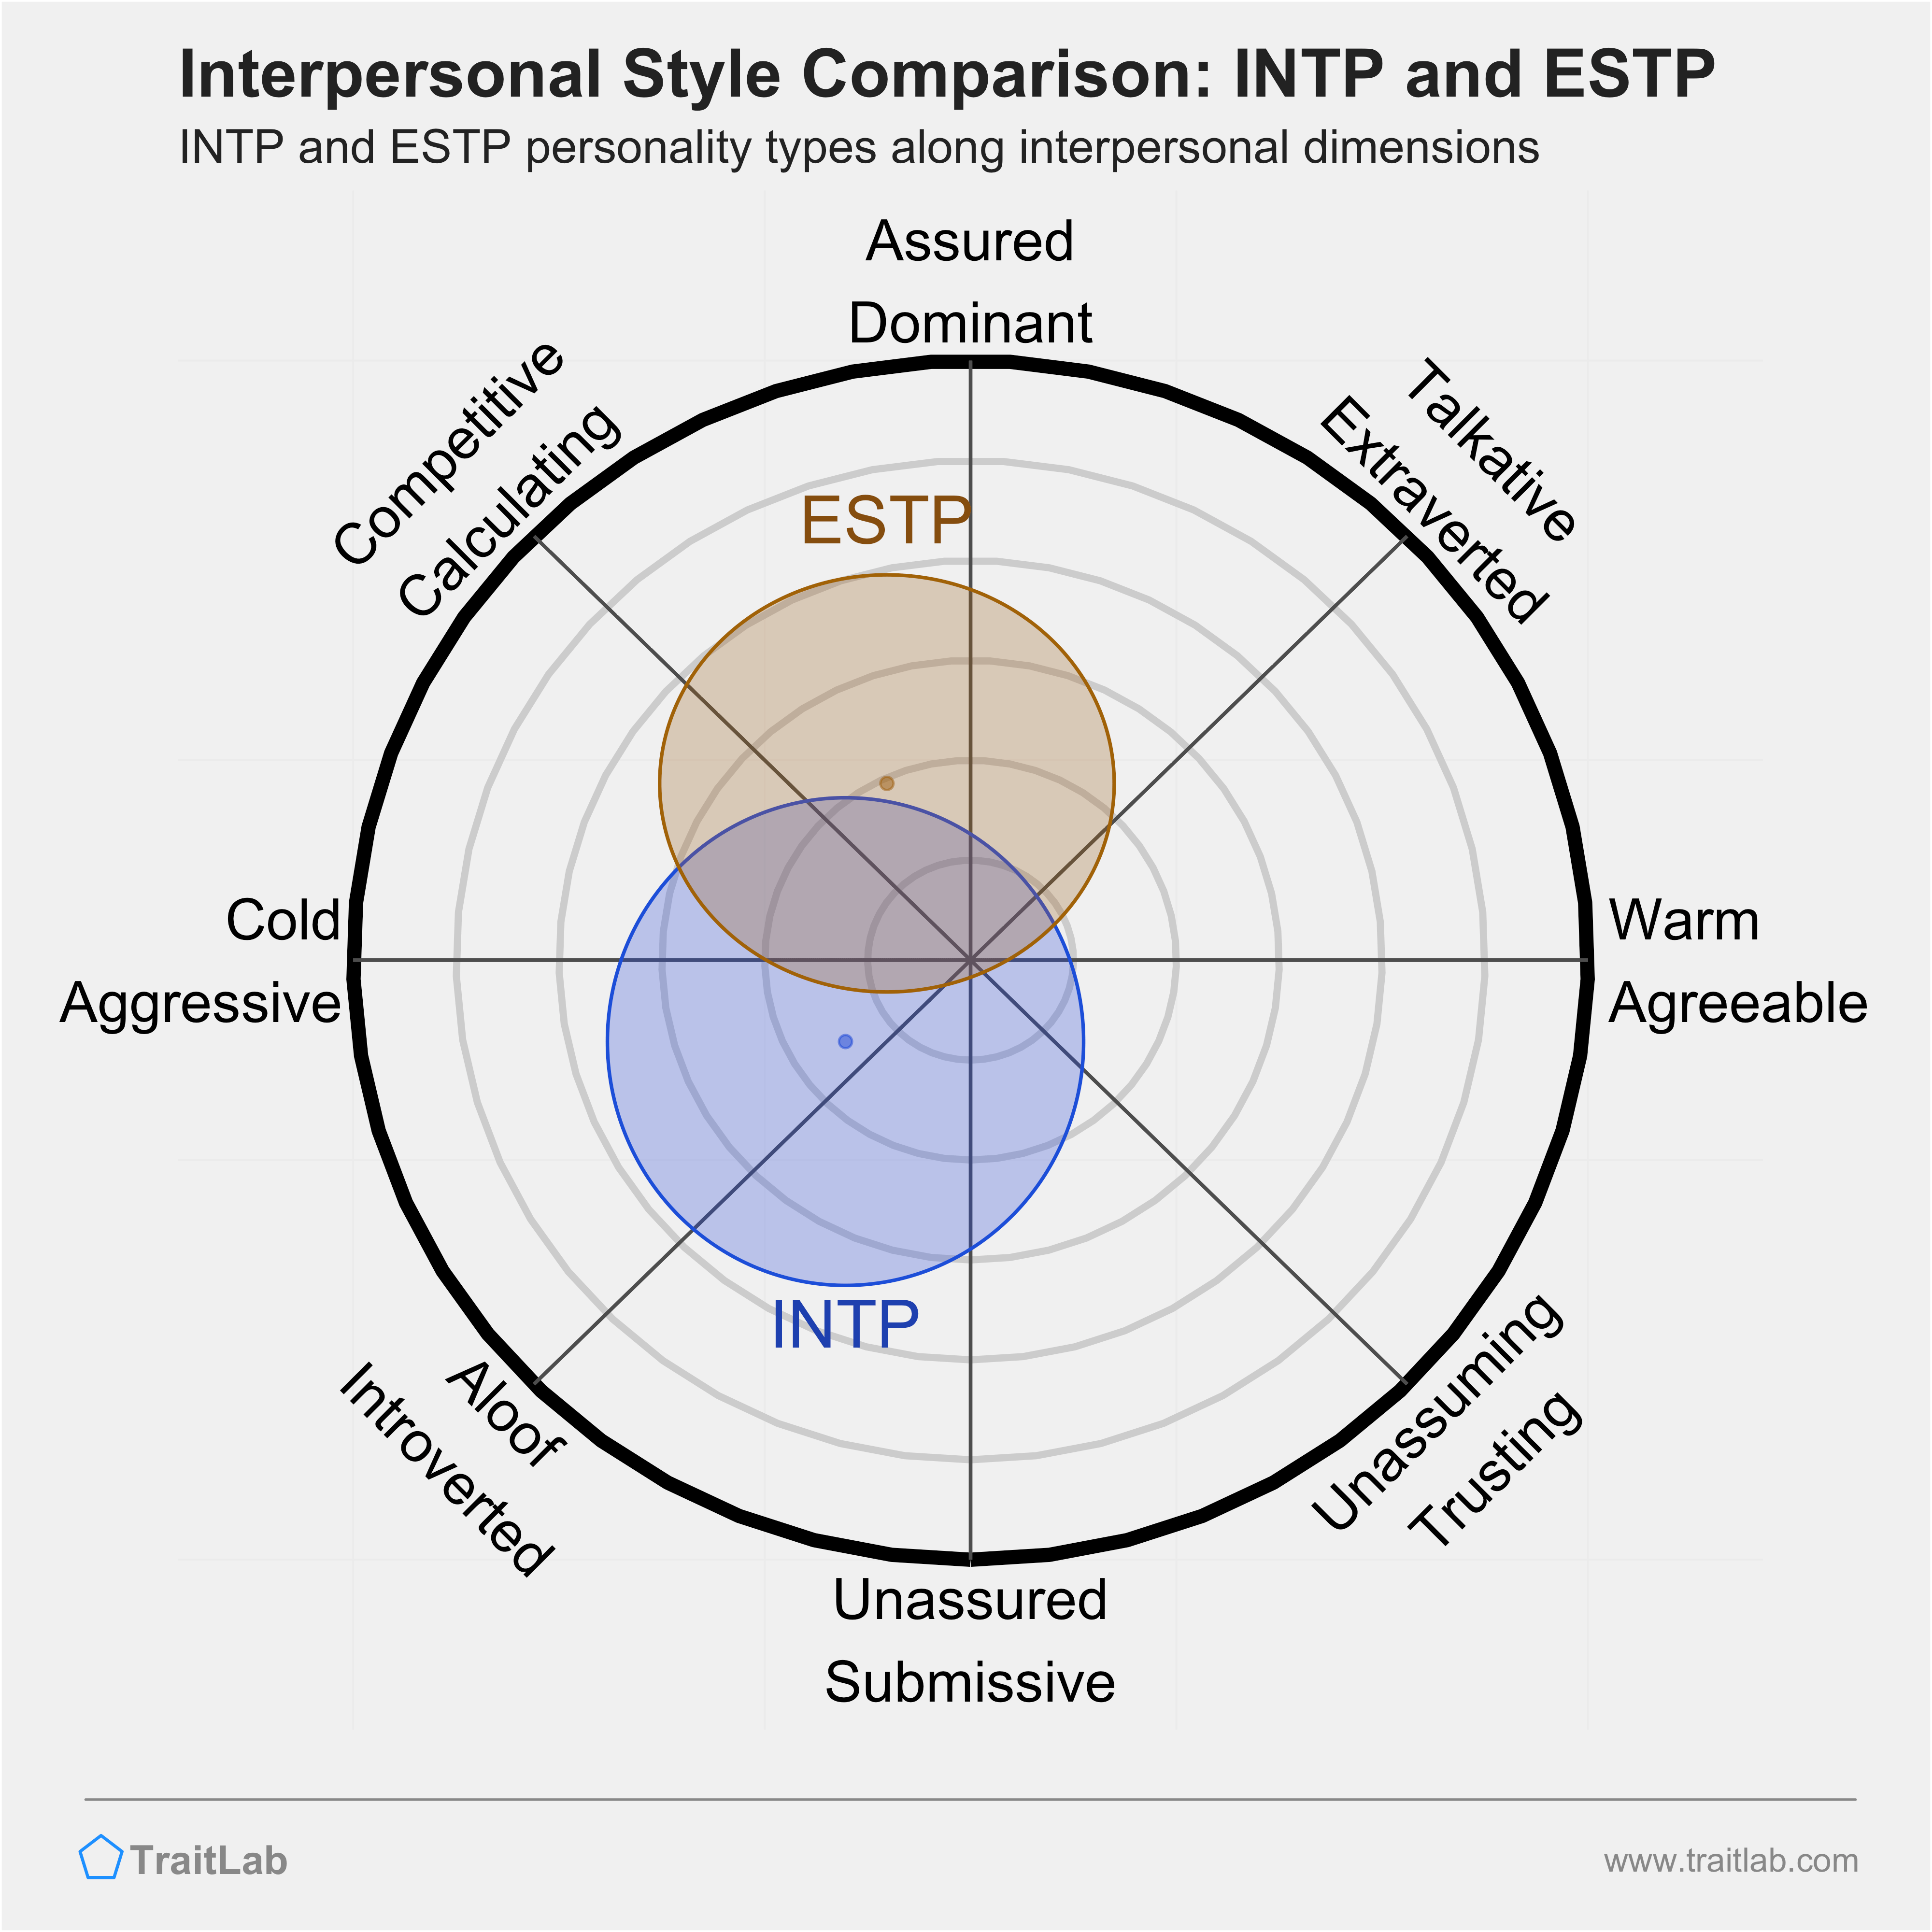 INTP and ESTP comparison across interpersonal dimensions